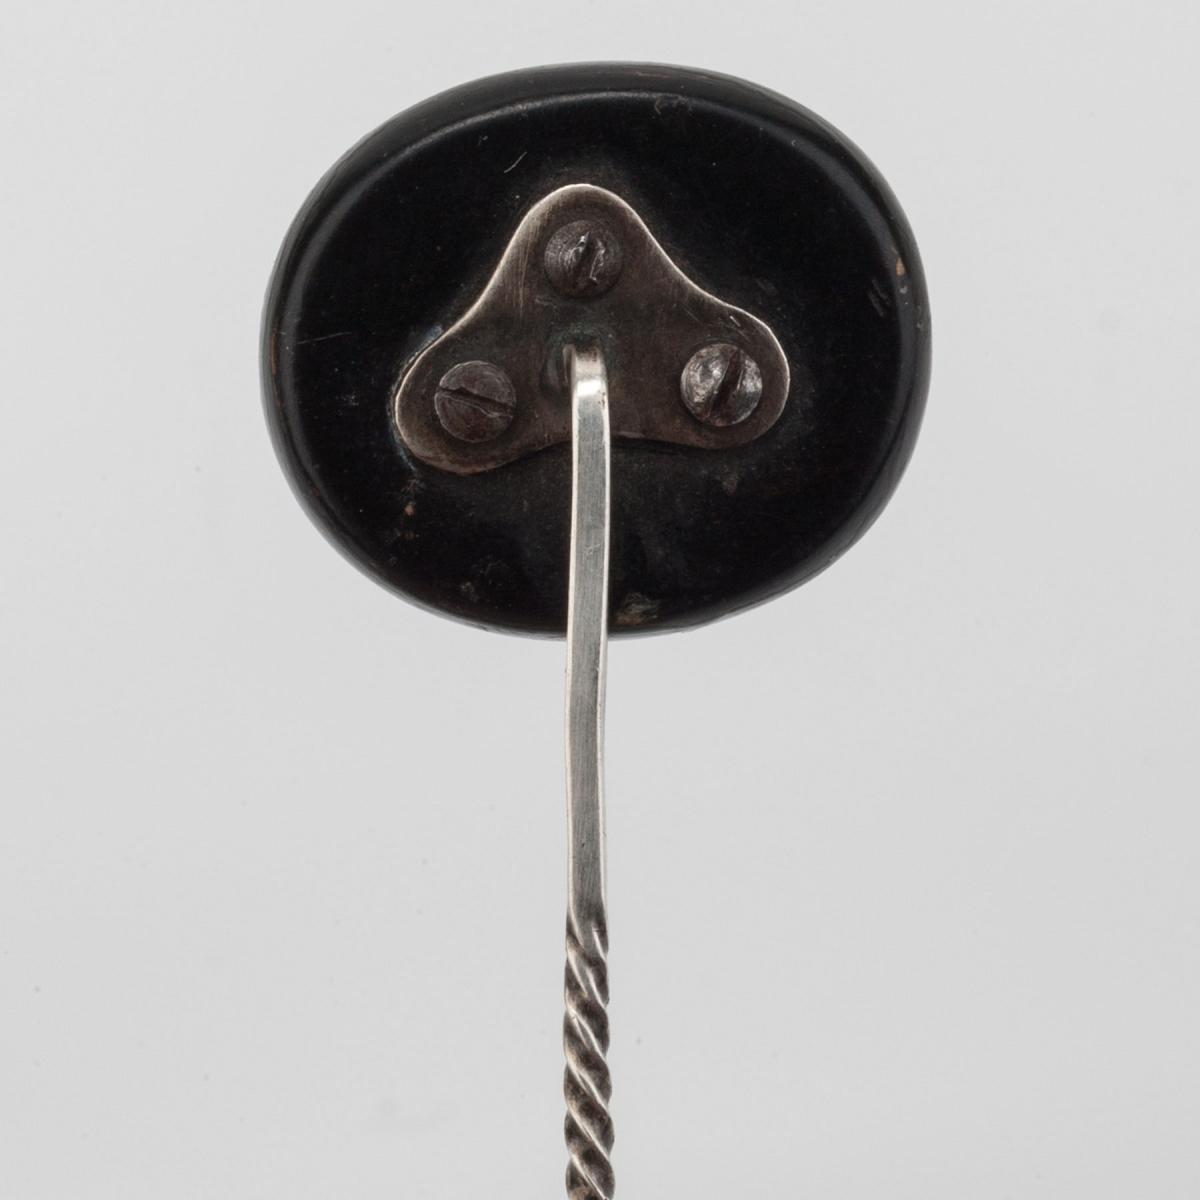 Mauchlinware Tie-Pin